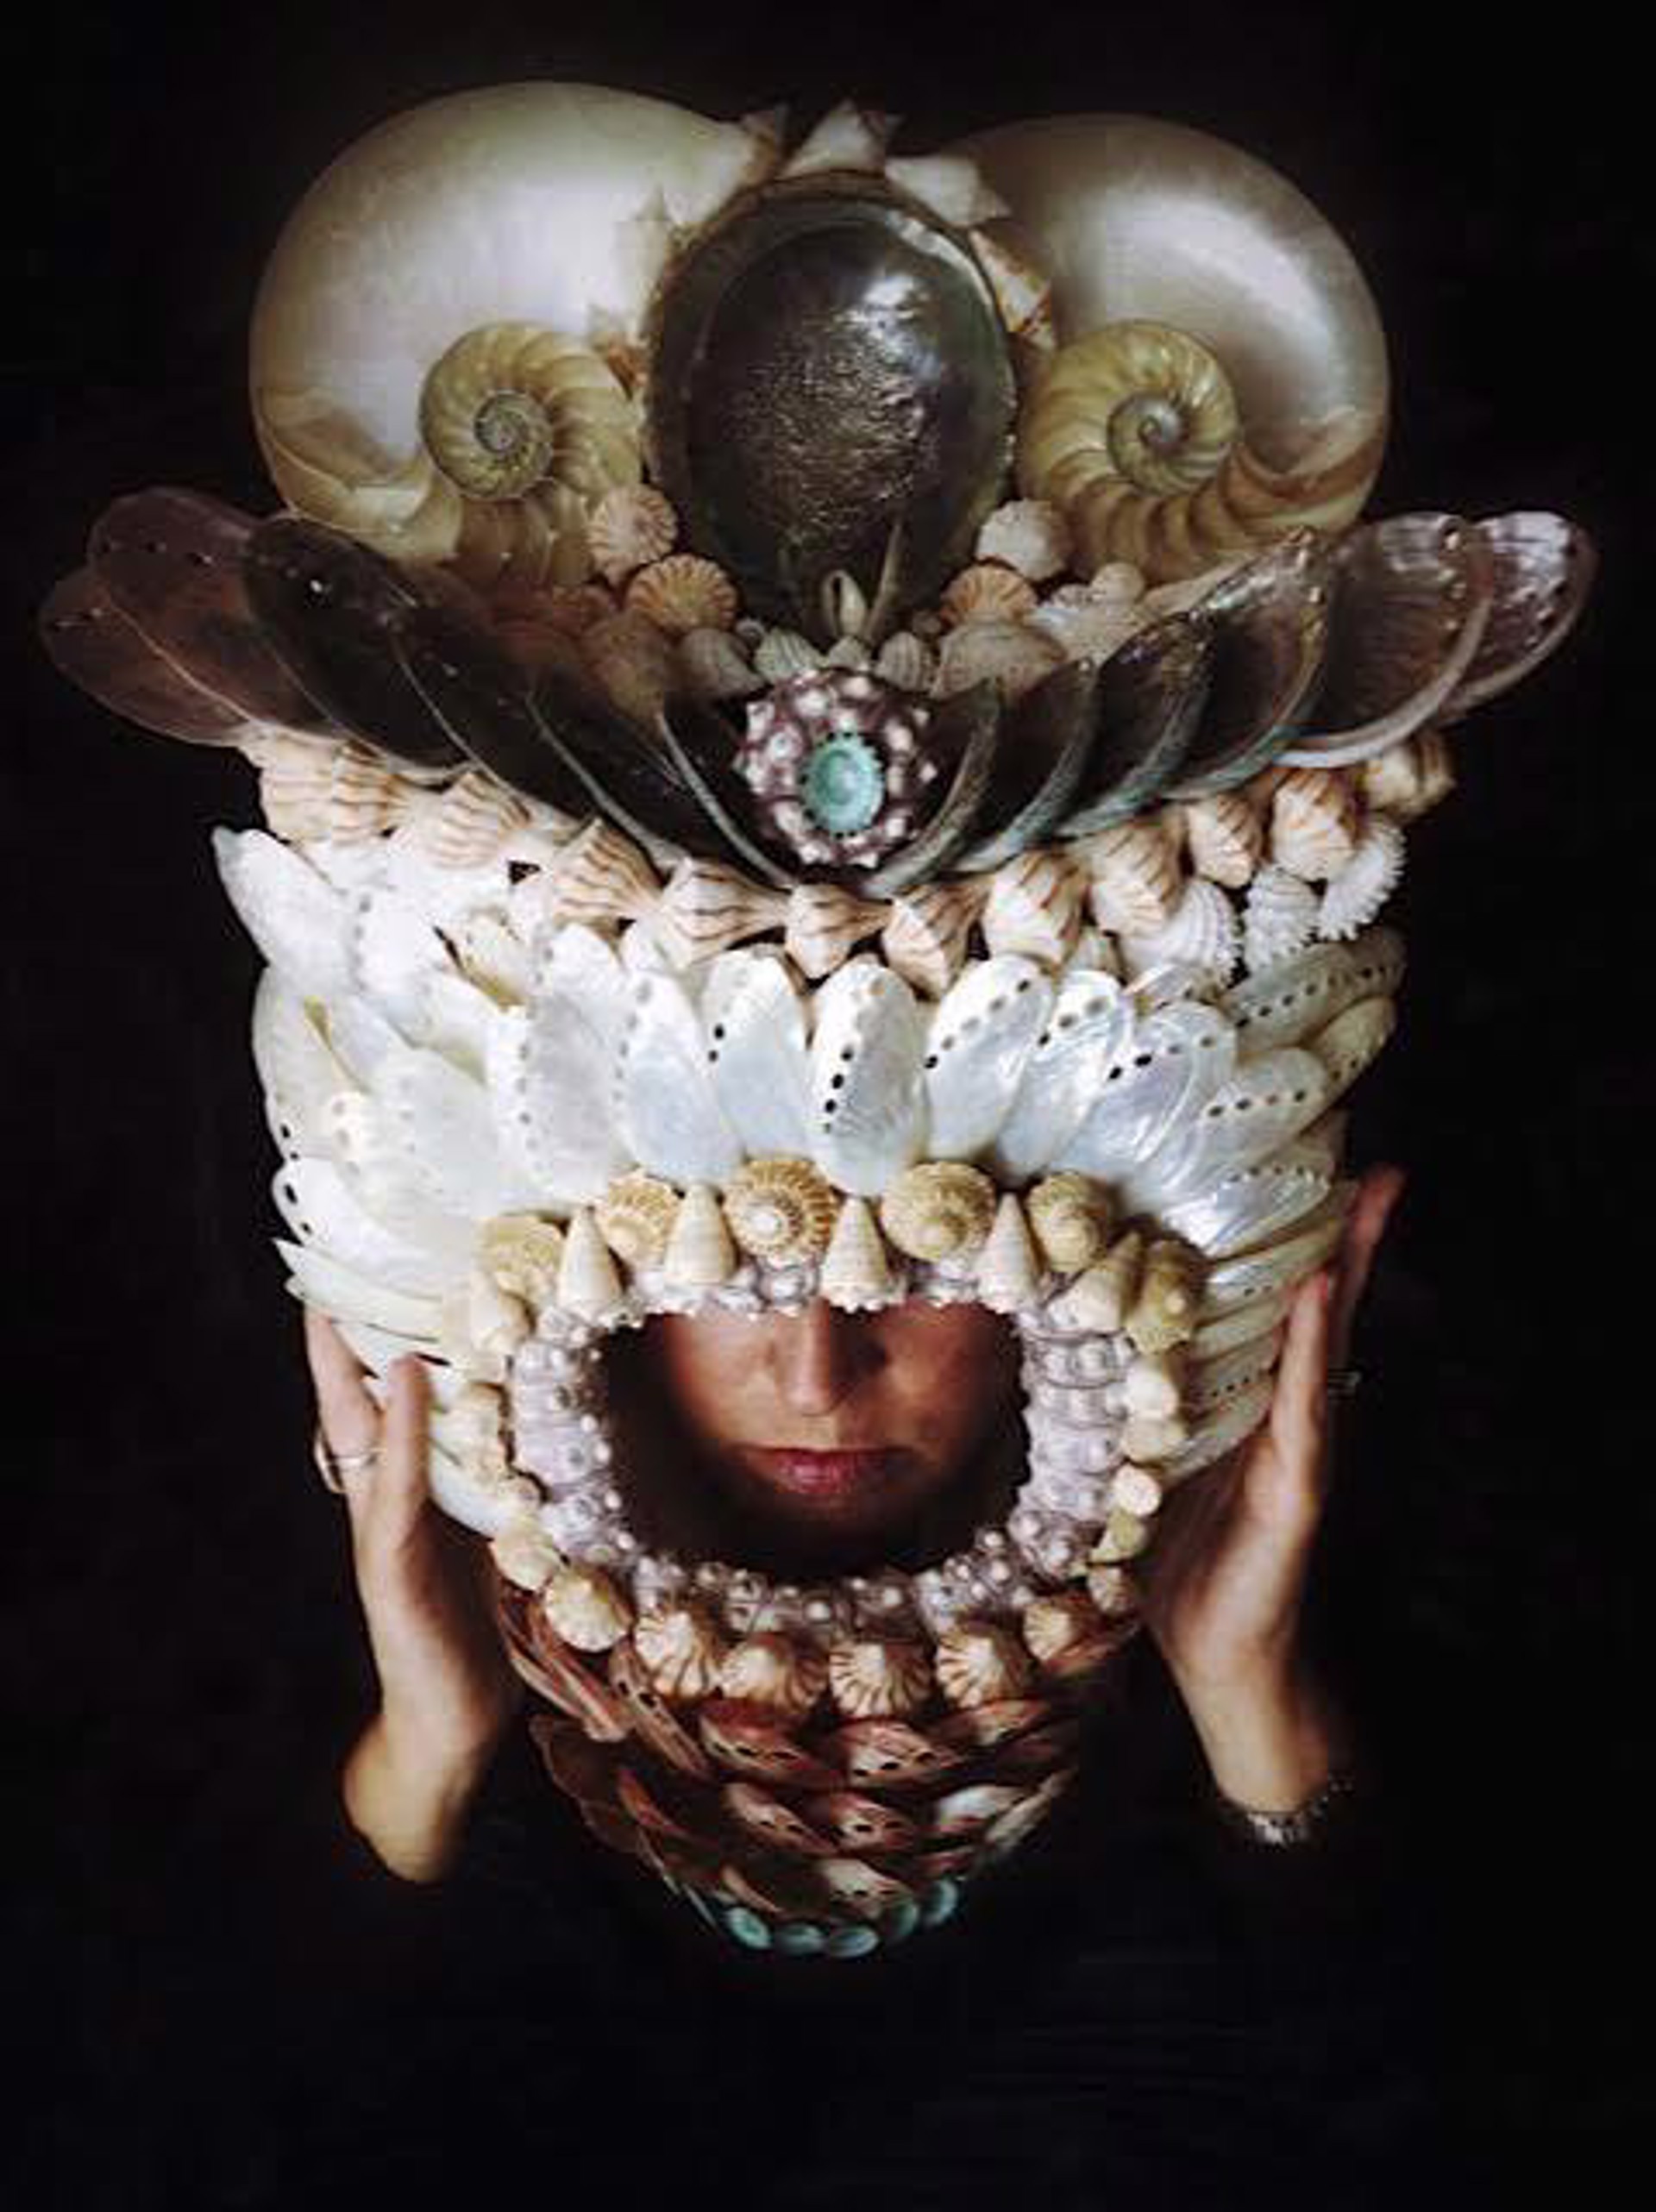 Shell (Headpiece and Armor) by Melissa Meier